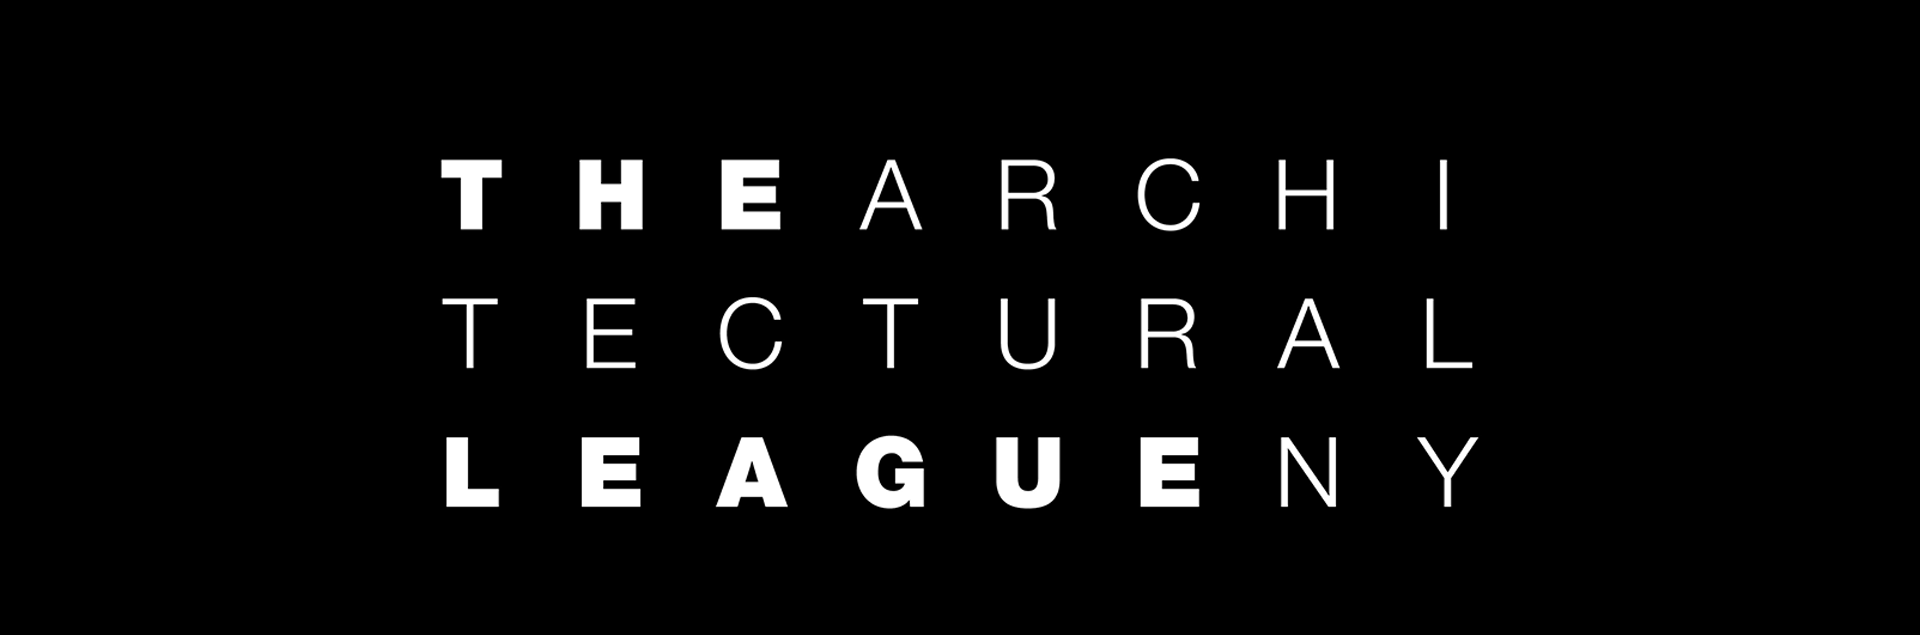 EAA – EMRE AROLAT ARCHITECTURE | Arolat At Architecture League Of New York